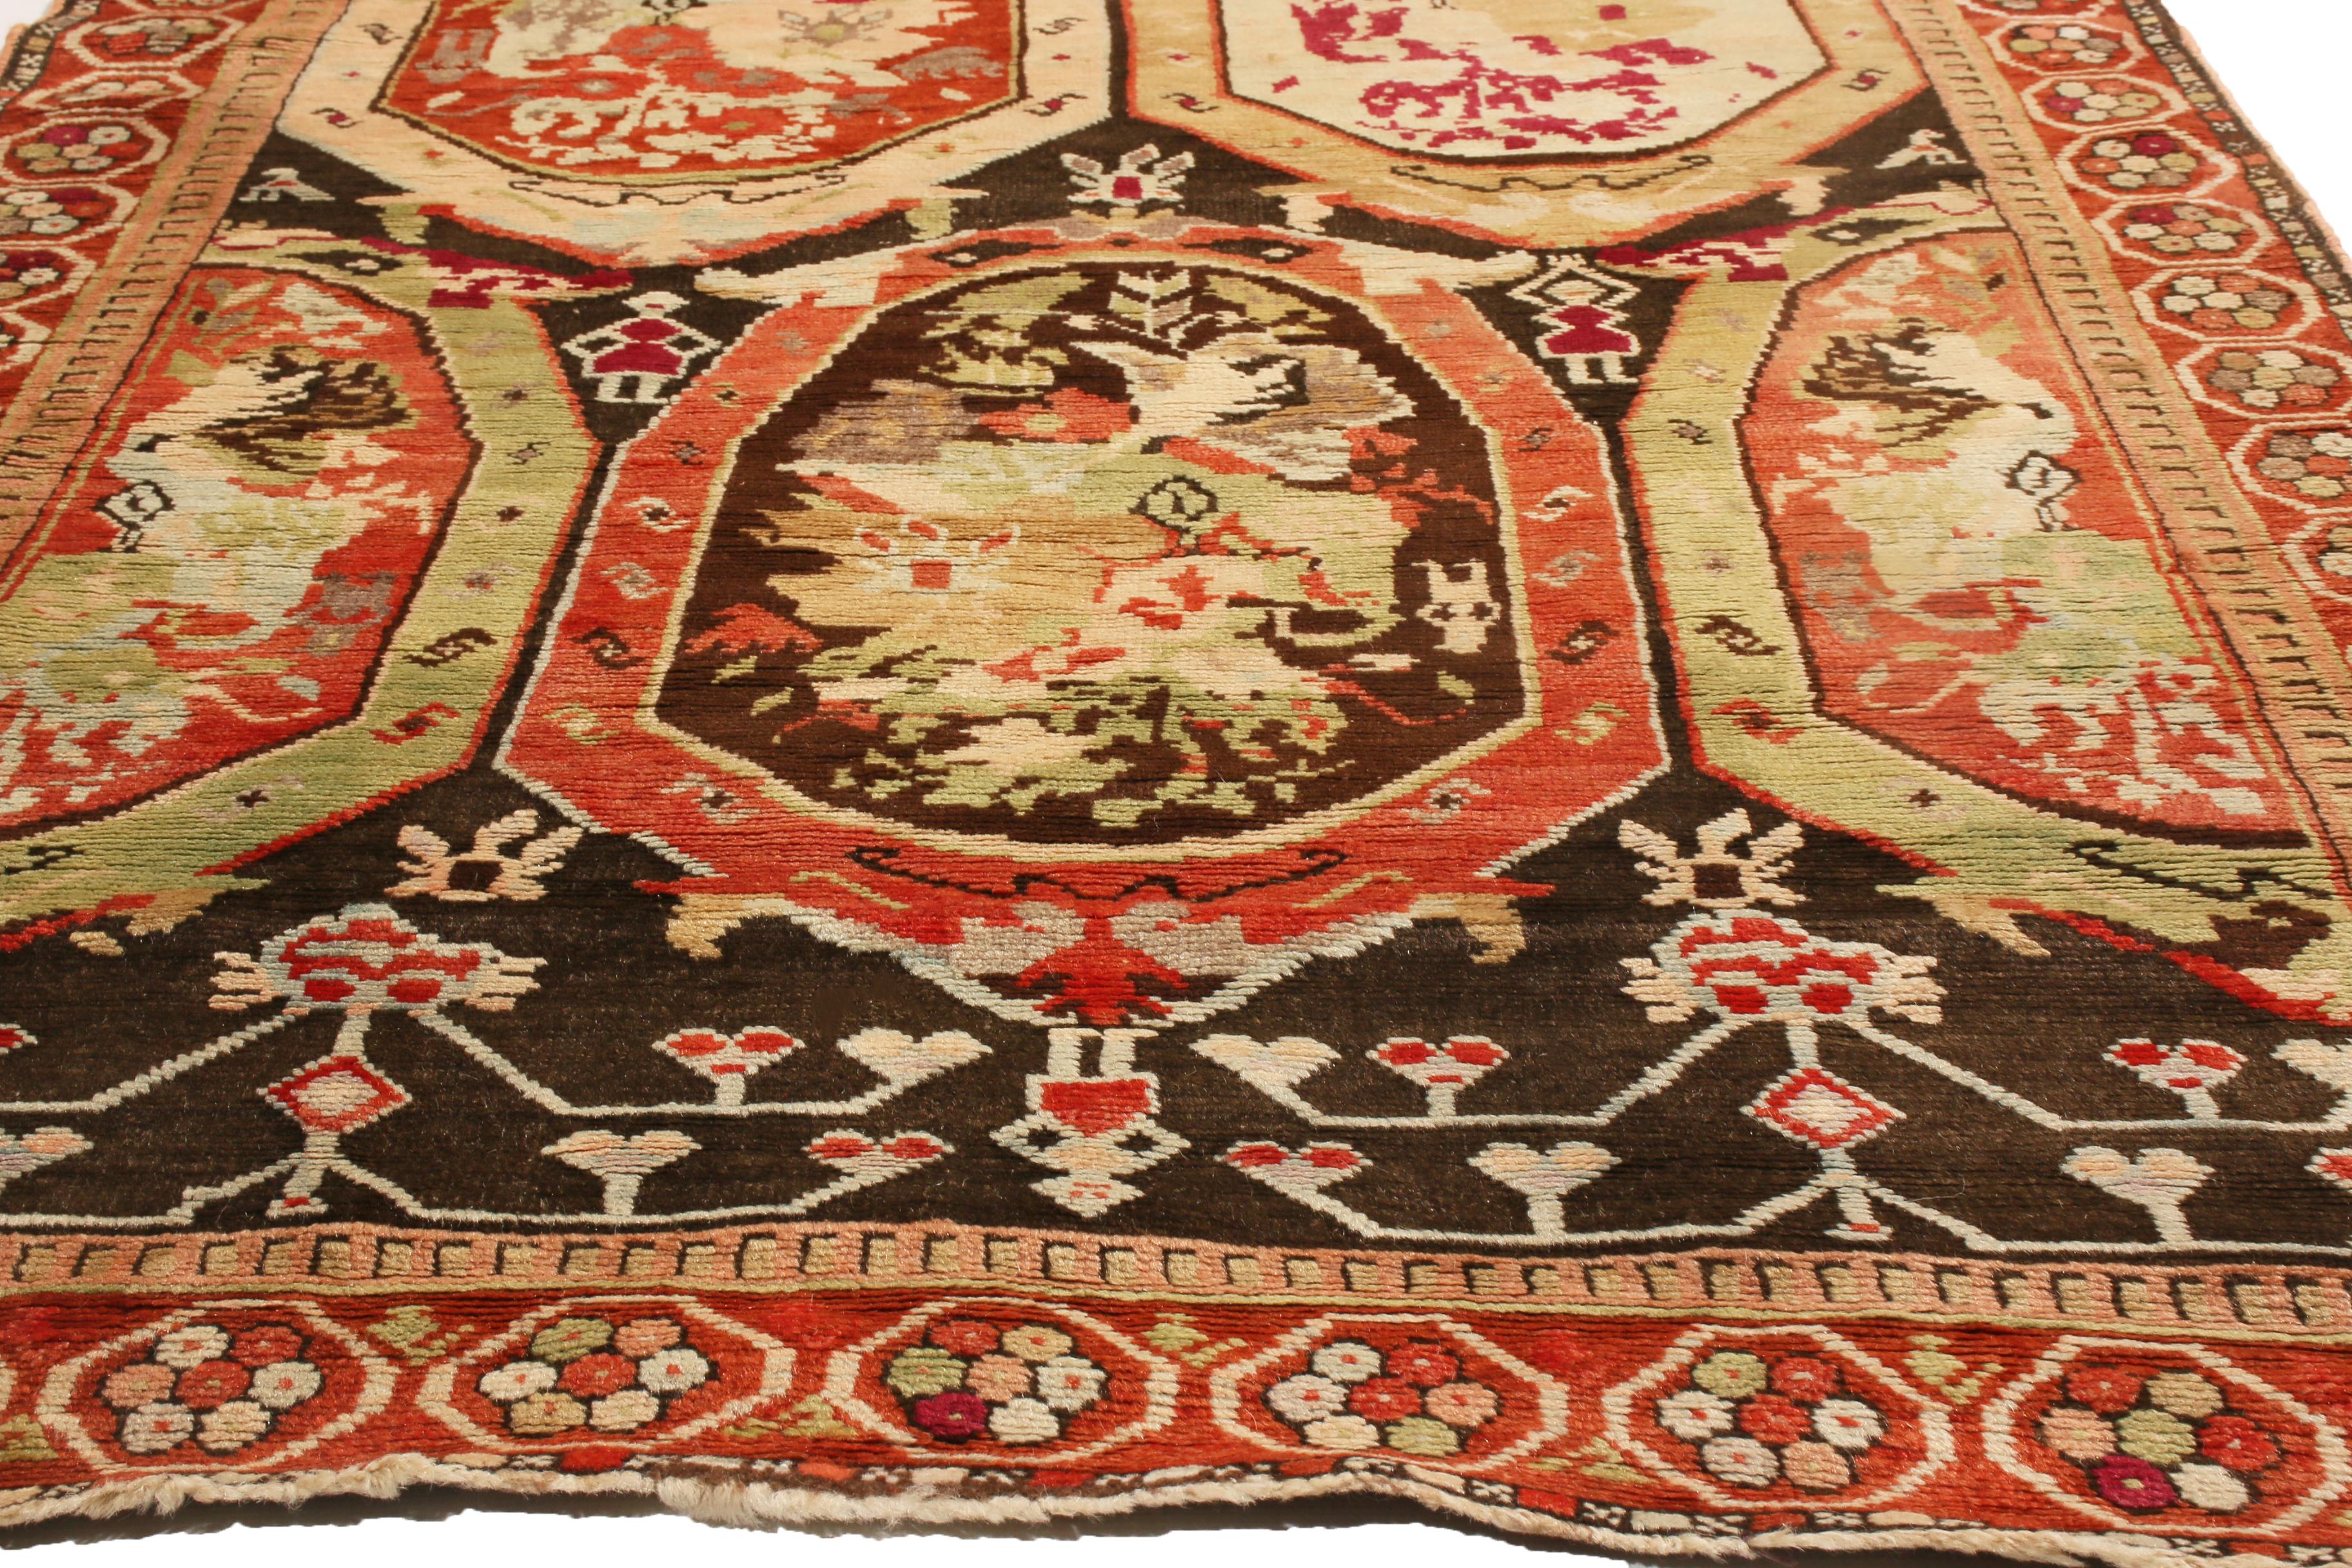 European Antique Karabagh Magenta and Brown Wool Runner Geometric Pattern by Rug & Kilim